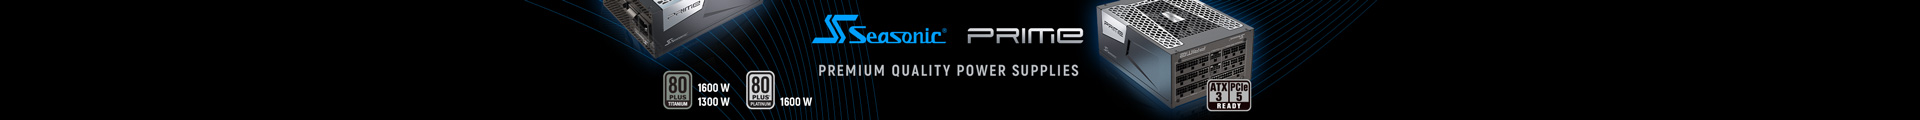 Seasonic Prime Premium Quality Power Supplies